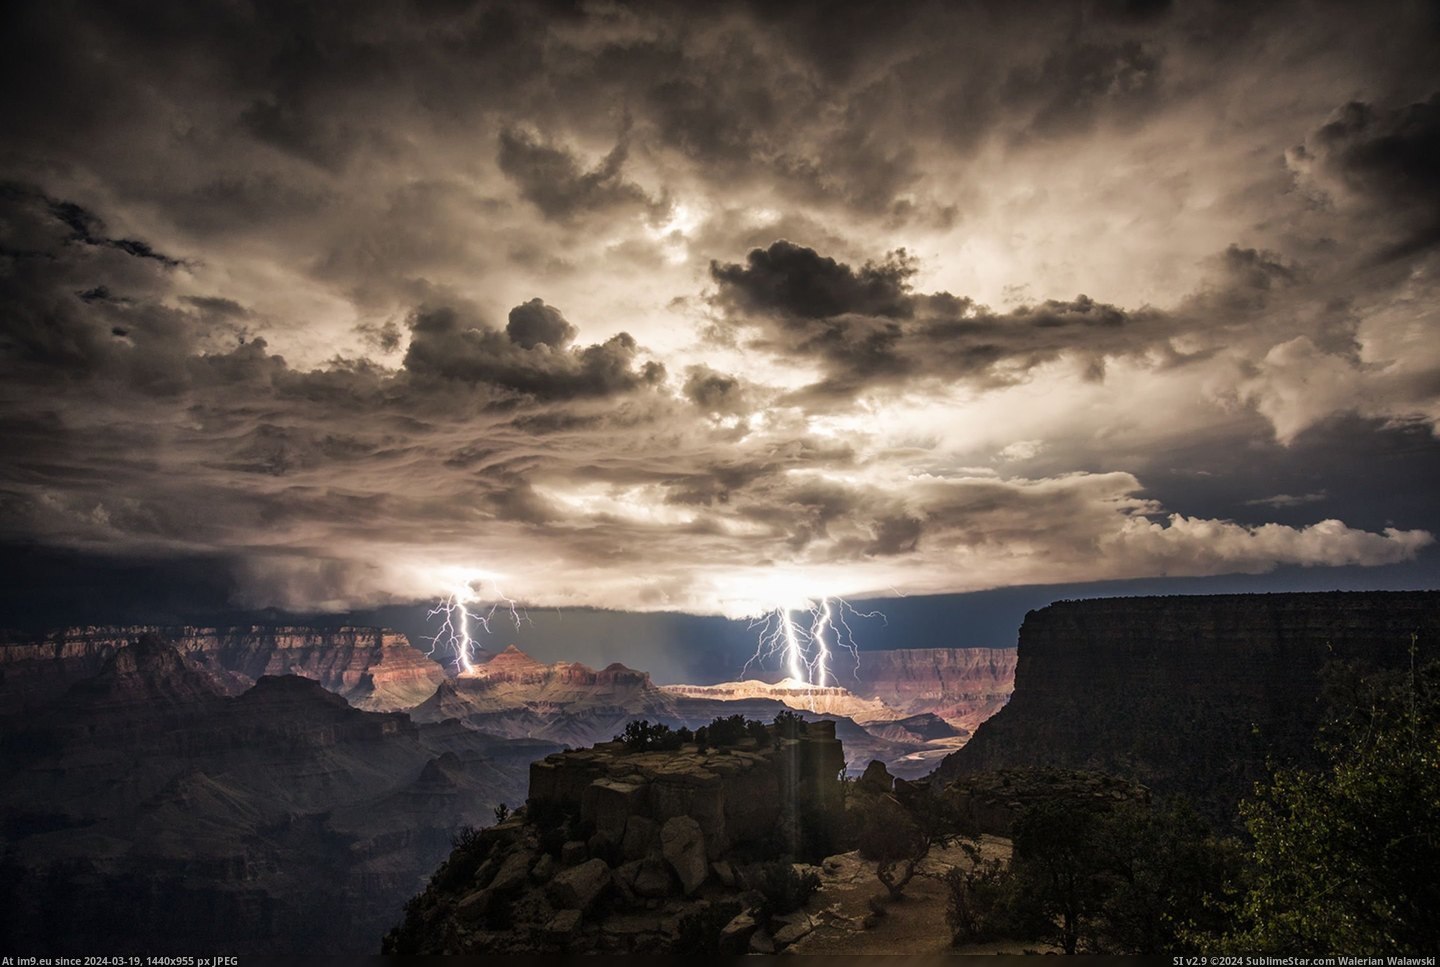 #Canyon #Thunderstorm #Nighttime #Grand [Pics] Nighttime thunderstorm over the Grand Canyon Pic. (Image of album My r/PICS favs))